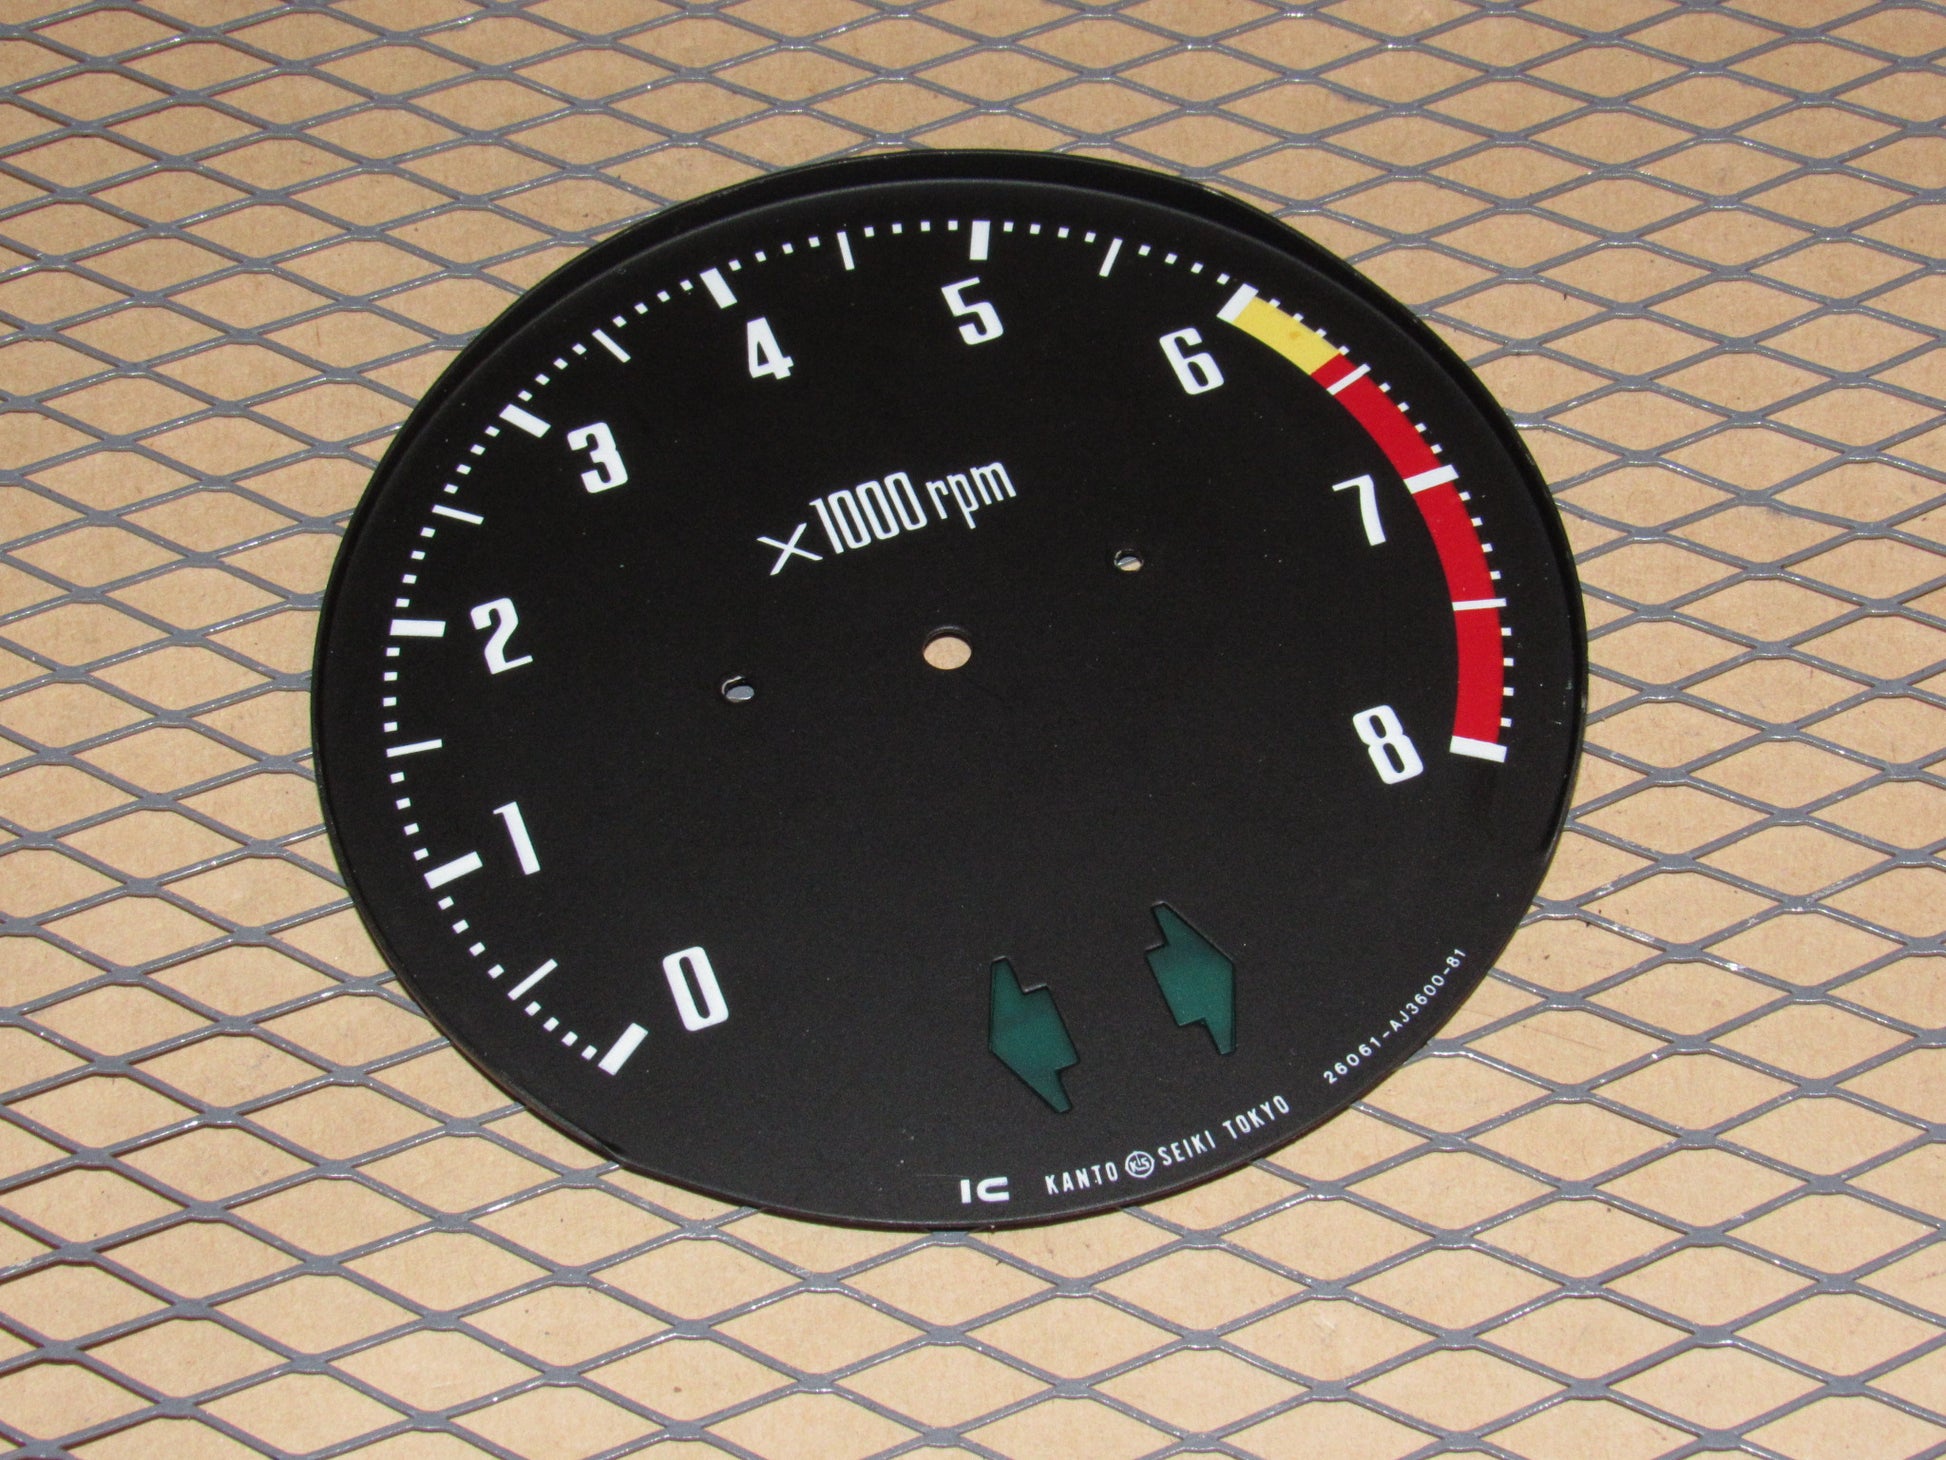 75 76 77 78 Datsun 280z OEM Tachometer Tach Rpm Meter Gauge Indicator Faceplate